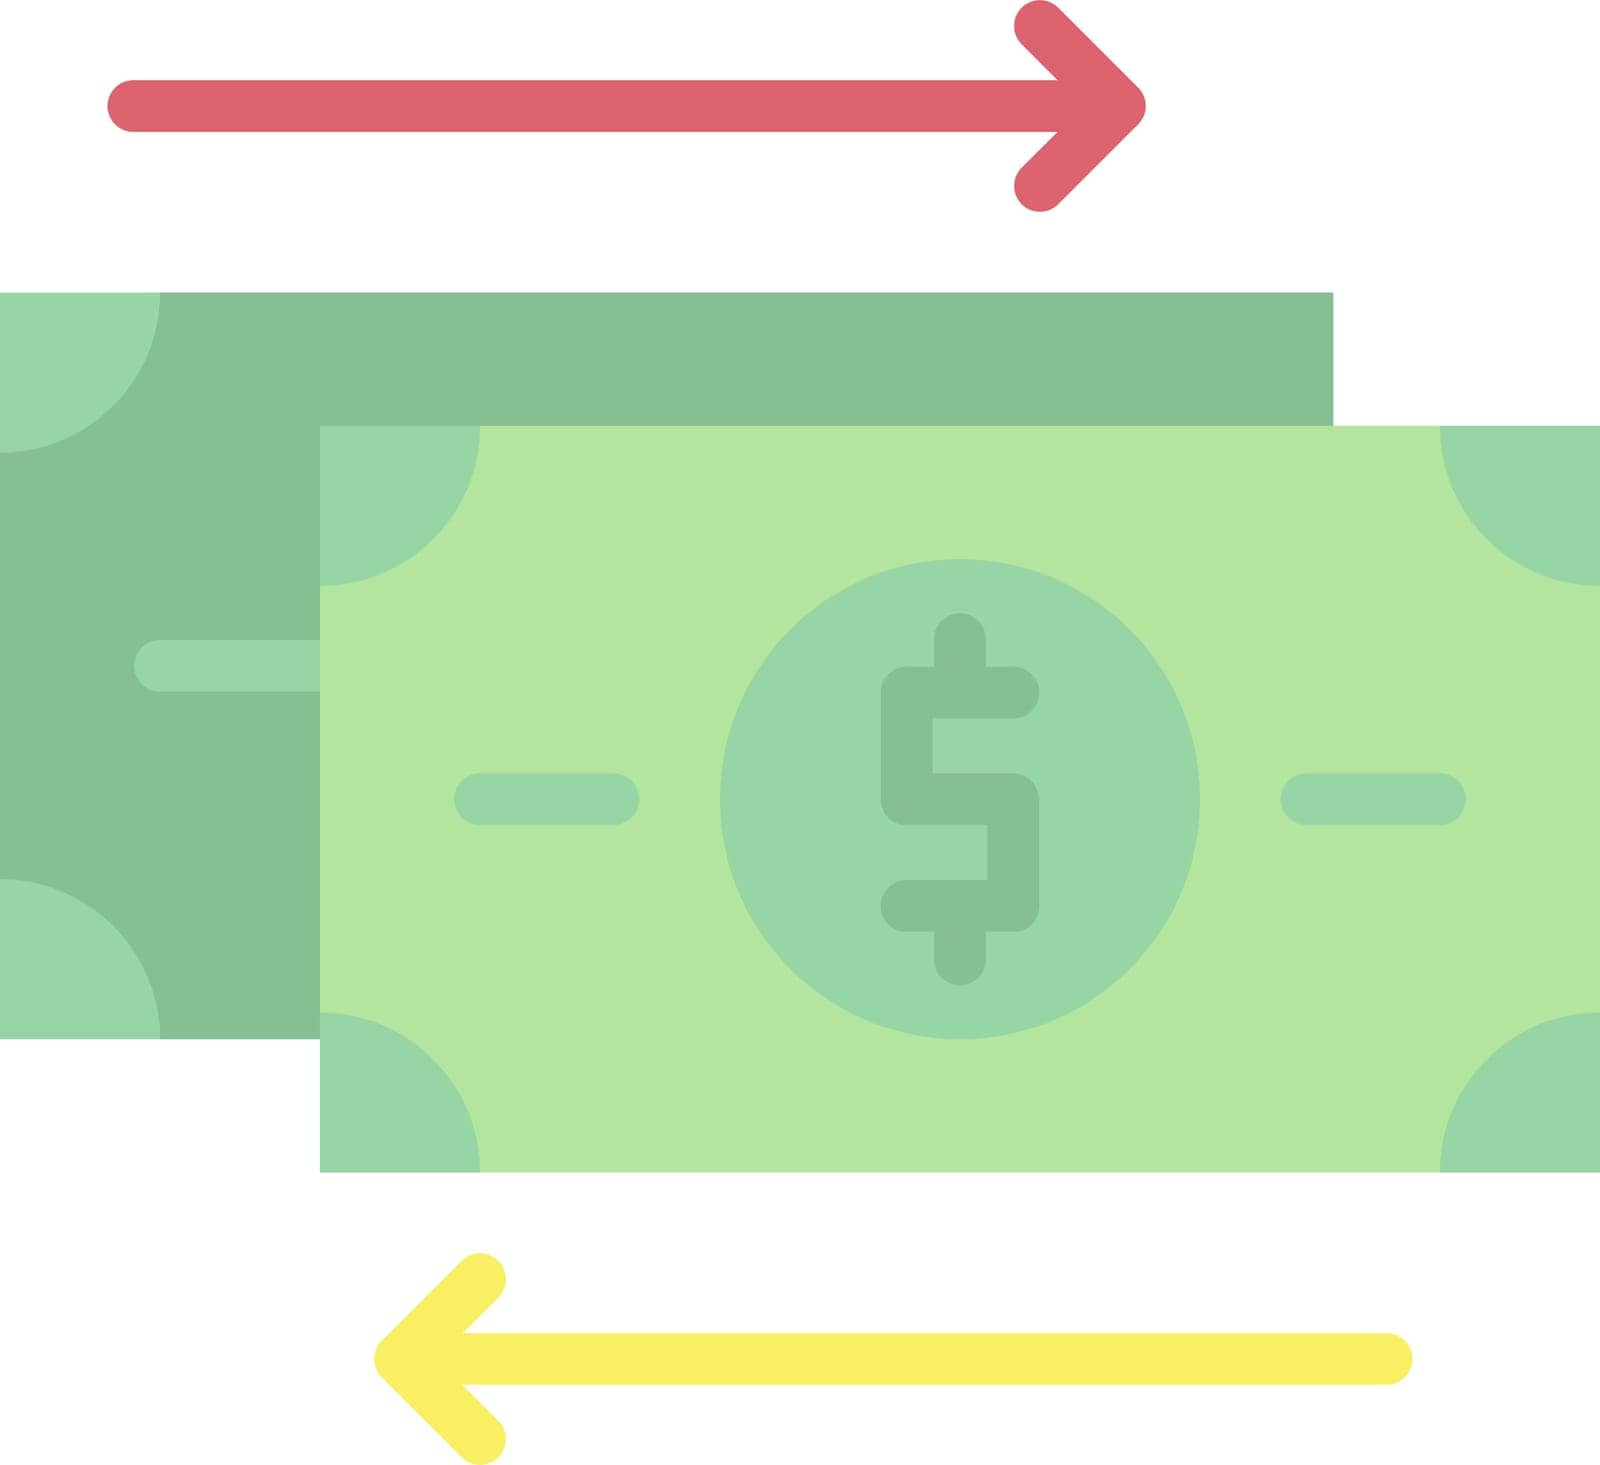 Cash Flow Icon image. Suitable for mobile application.